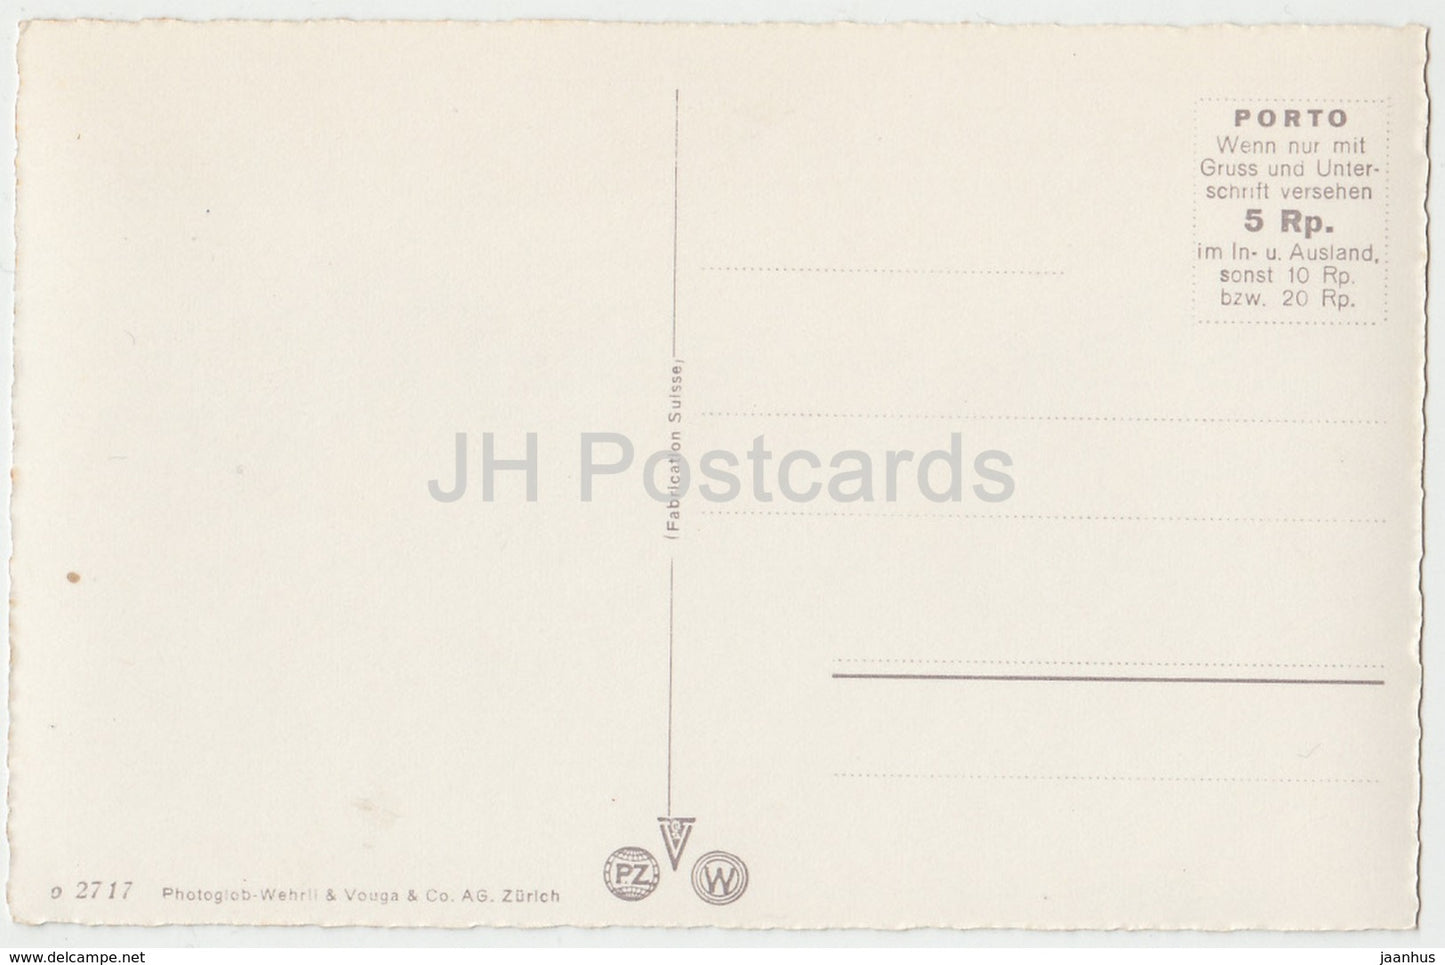 Oberalpsee 2028 m mit Hotel - Suisse - carte postale ancienne - inutilisée